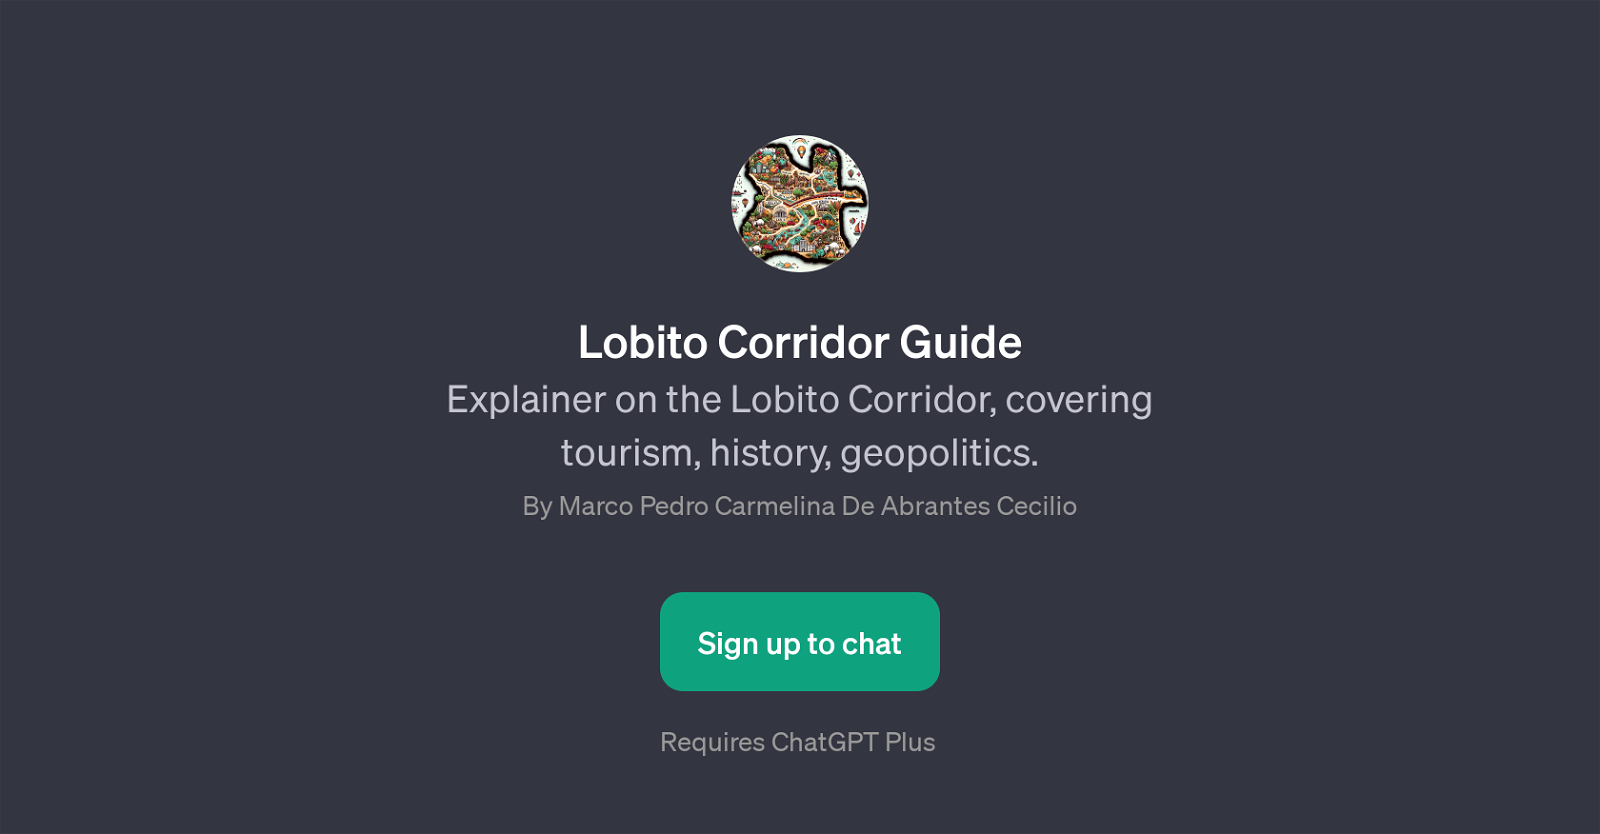 Lobito Corridor Guide website